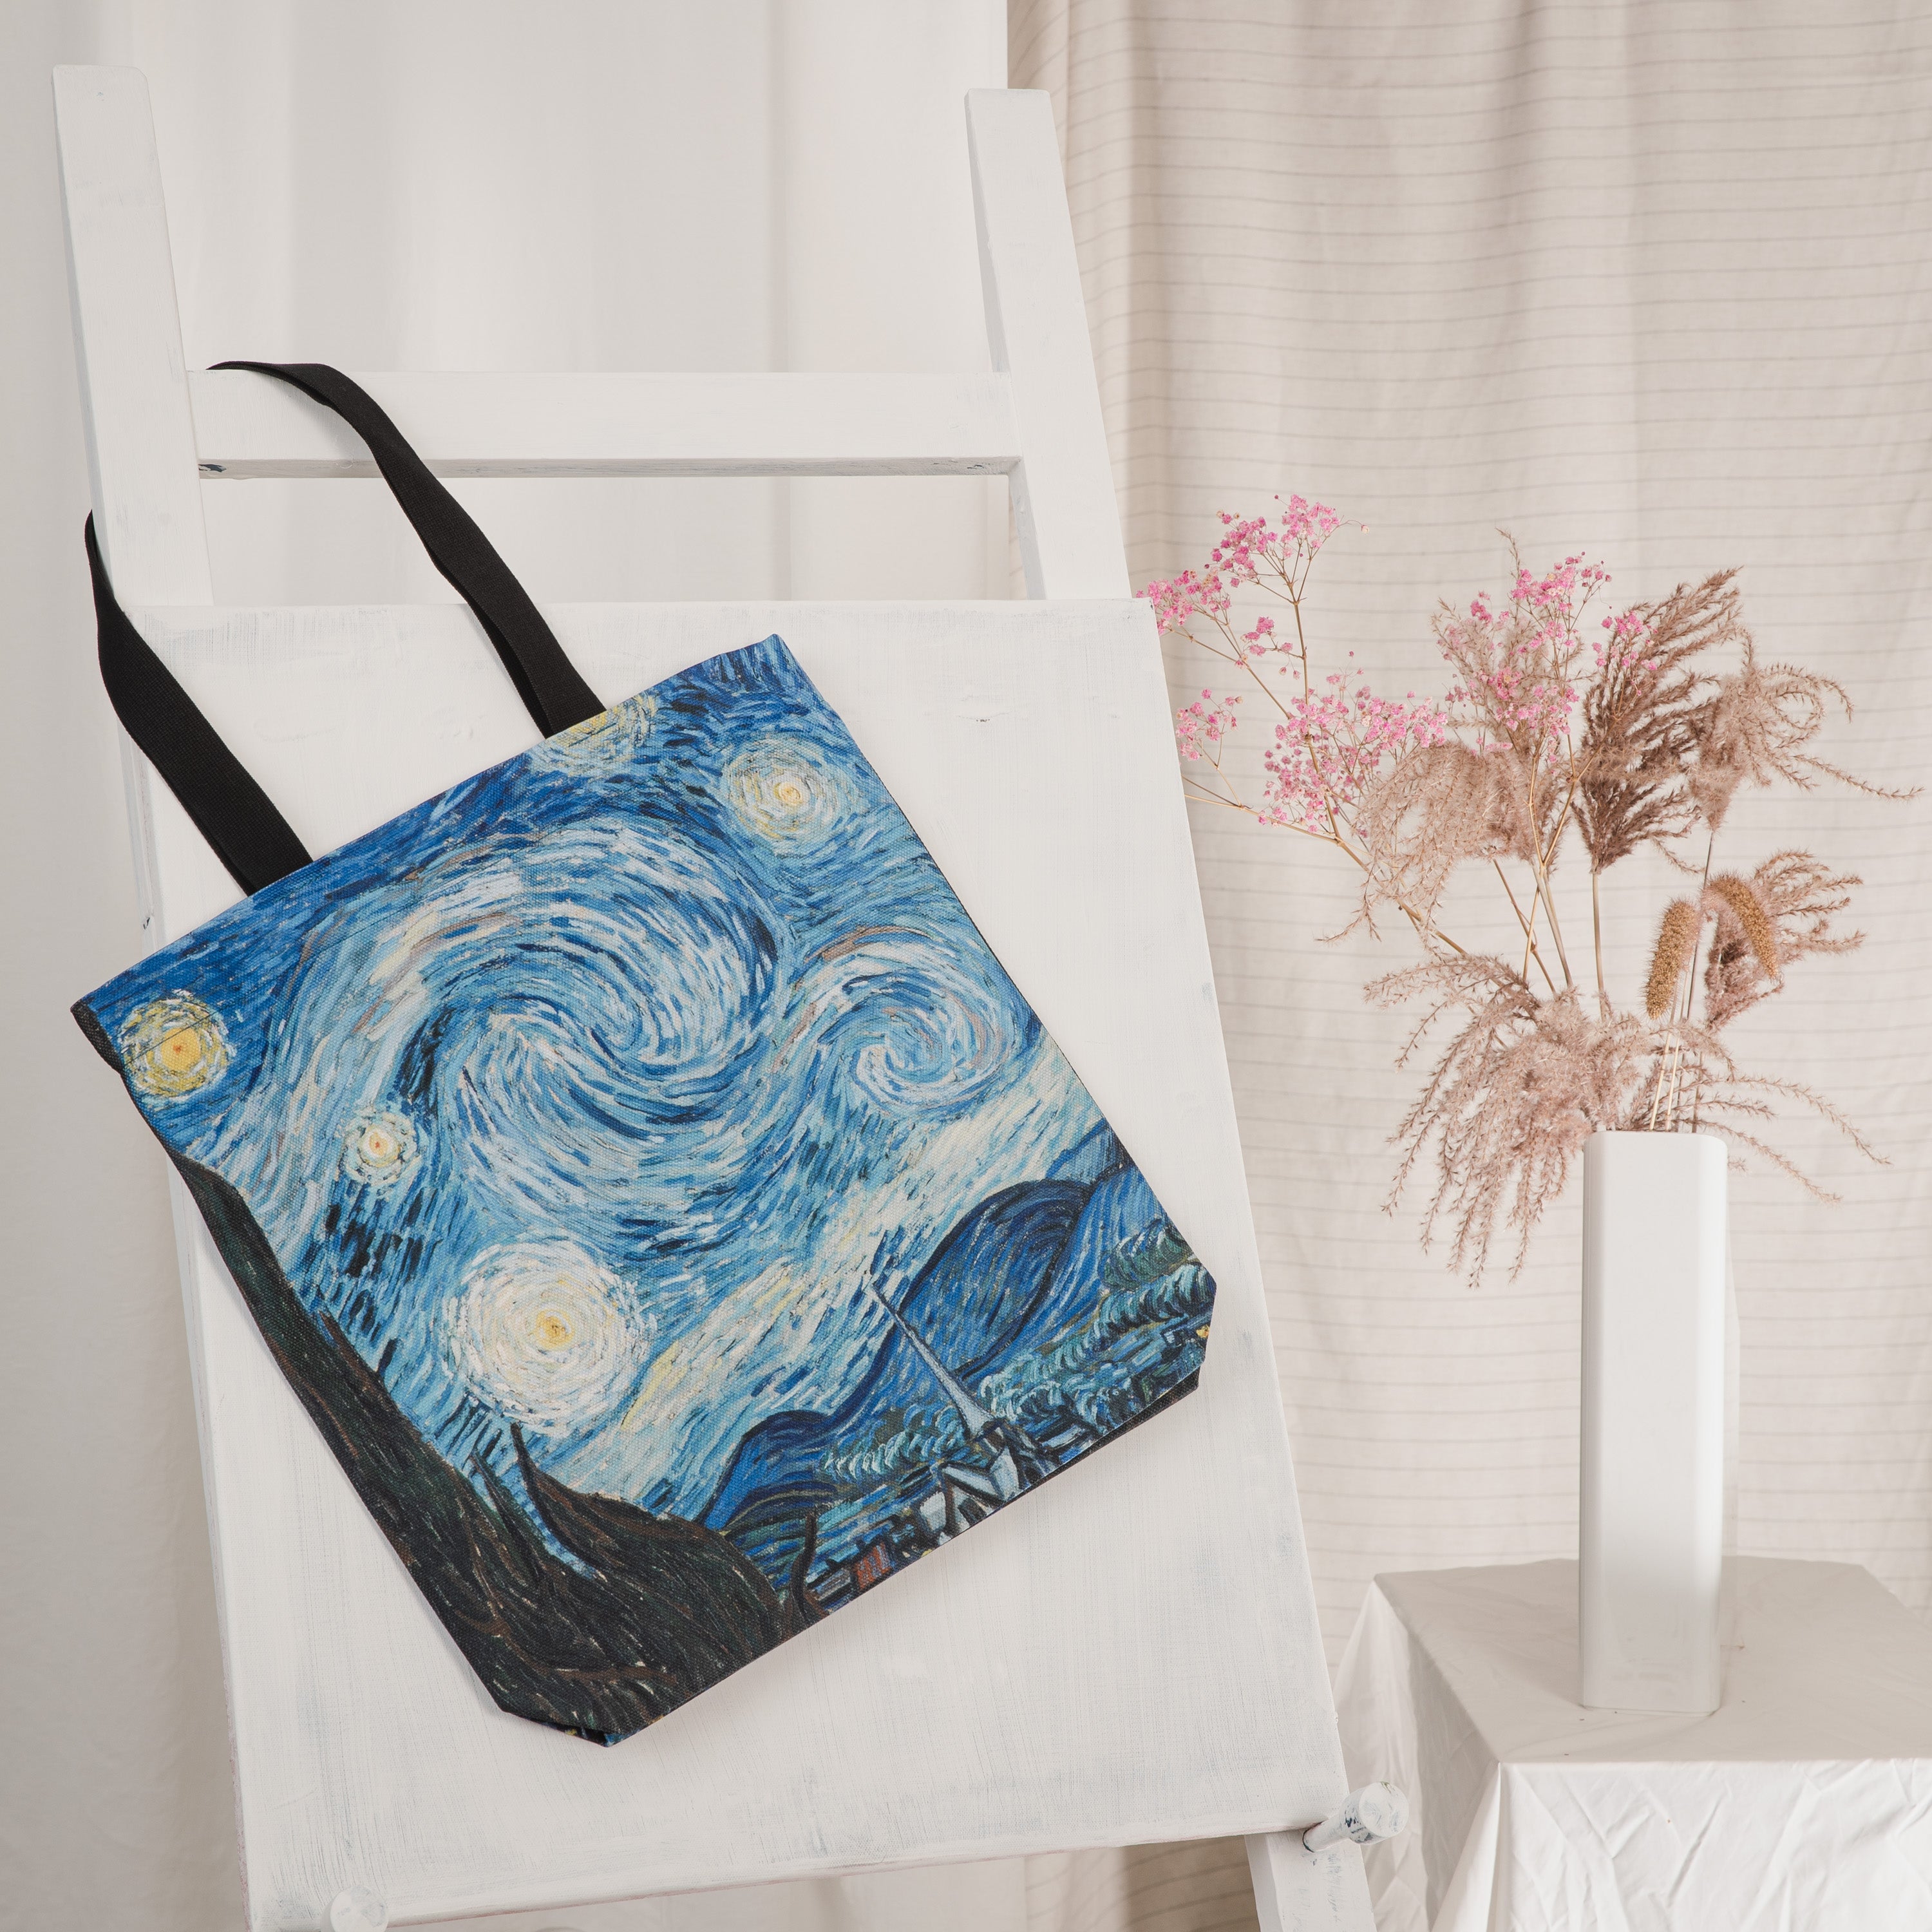 Pirkinių krepšys Vincent van Gogh "Starry Night"